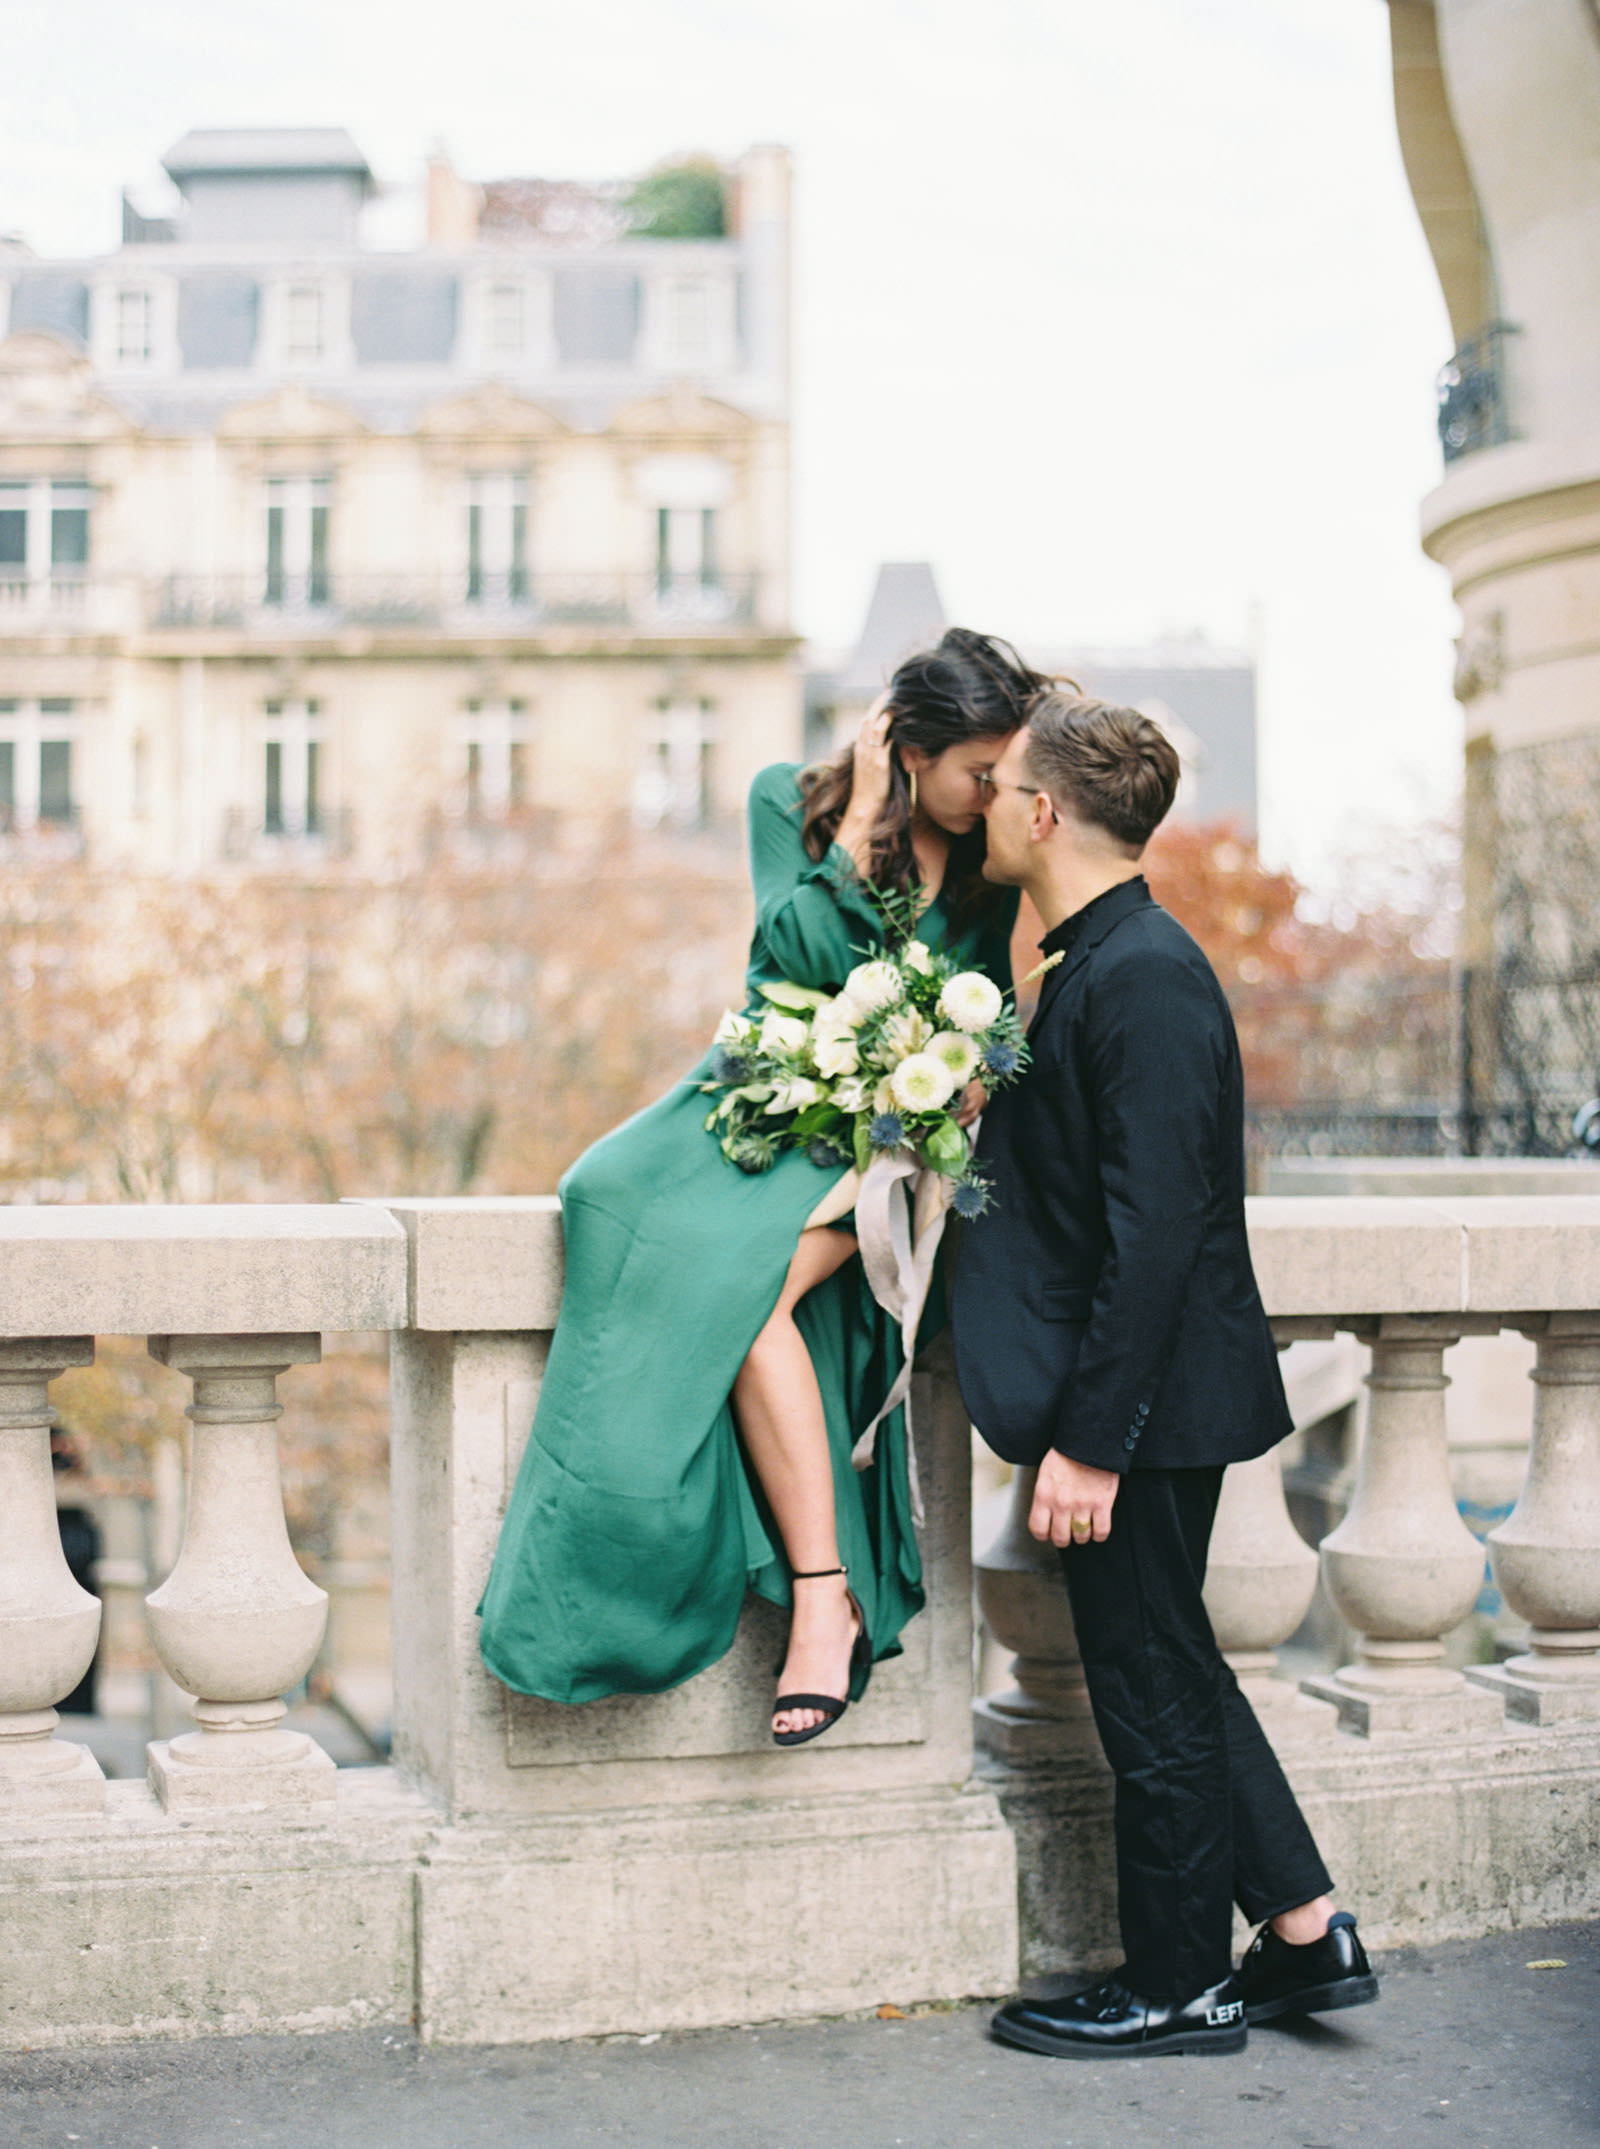 Engagement photos near Eiffel Tower - film photography - KR Moreno Photo